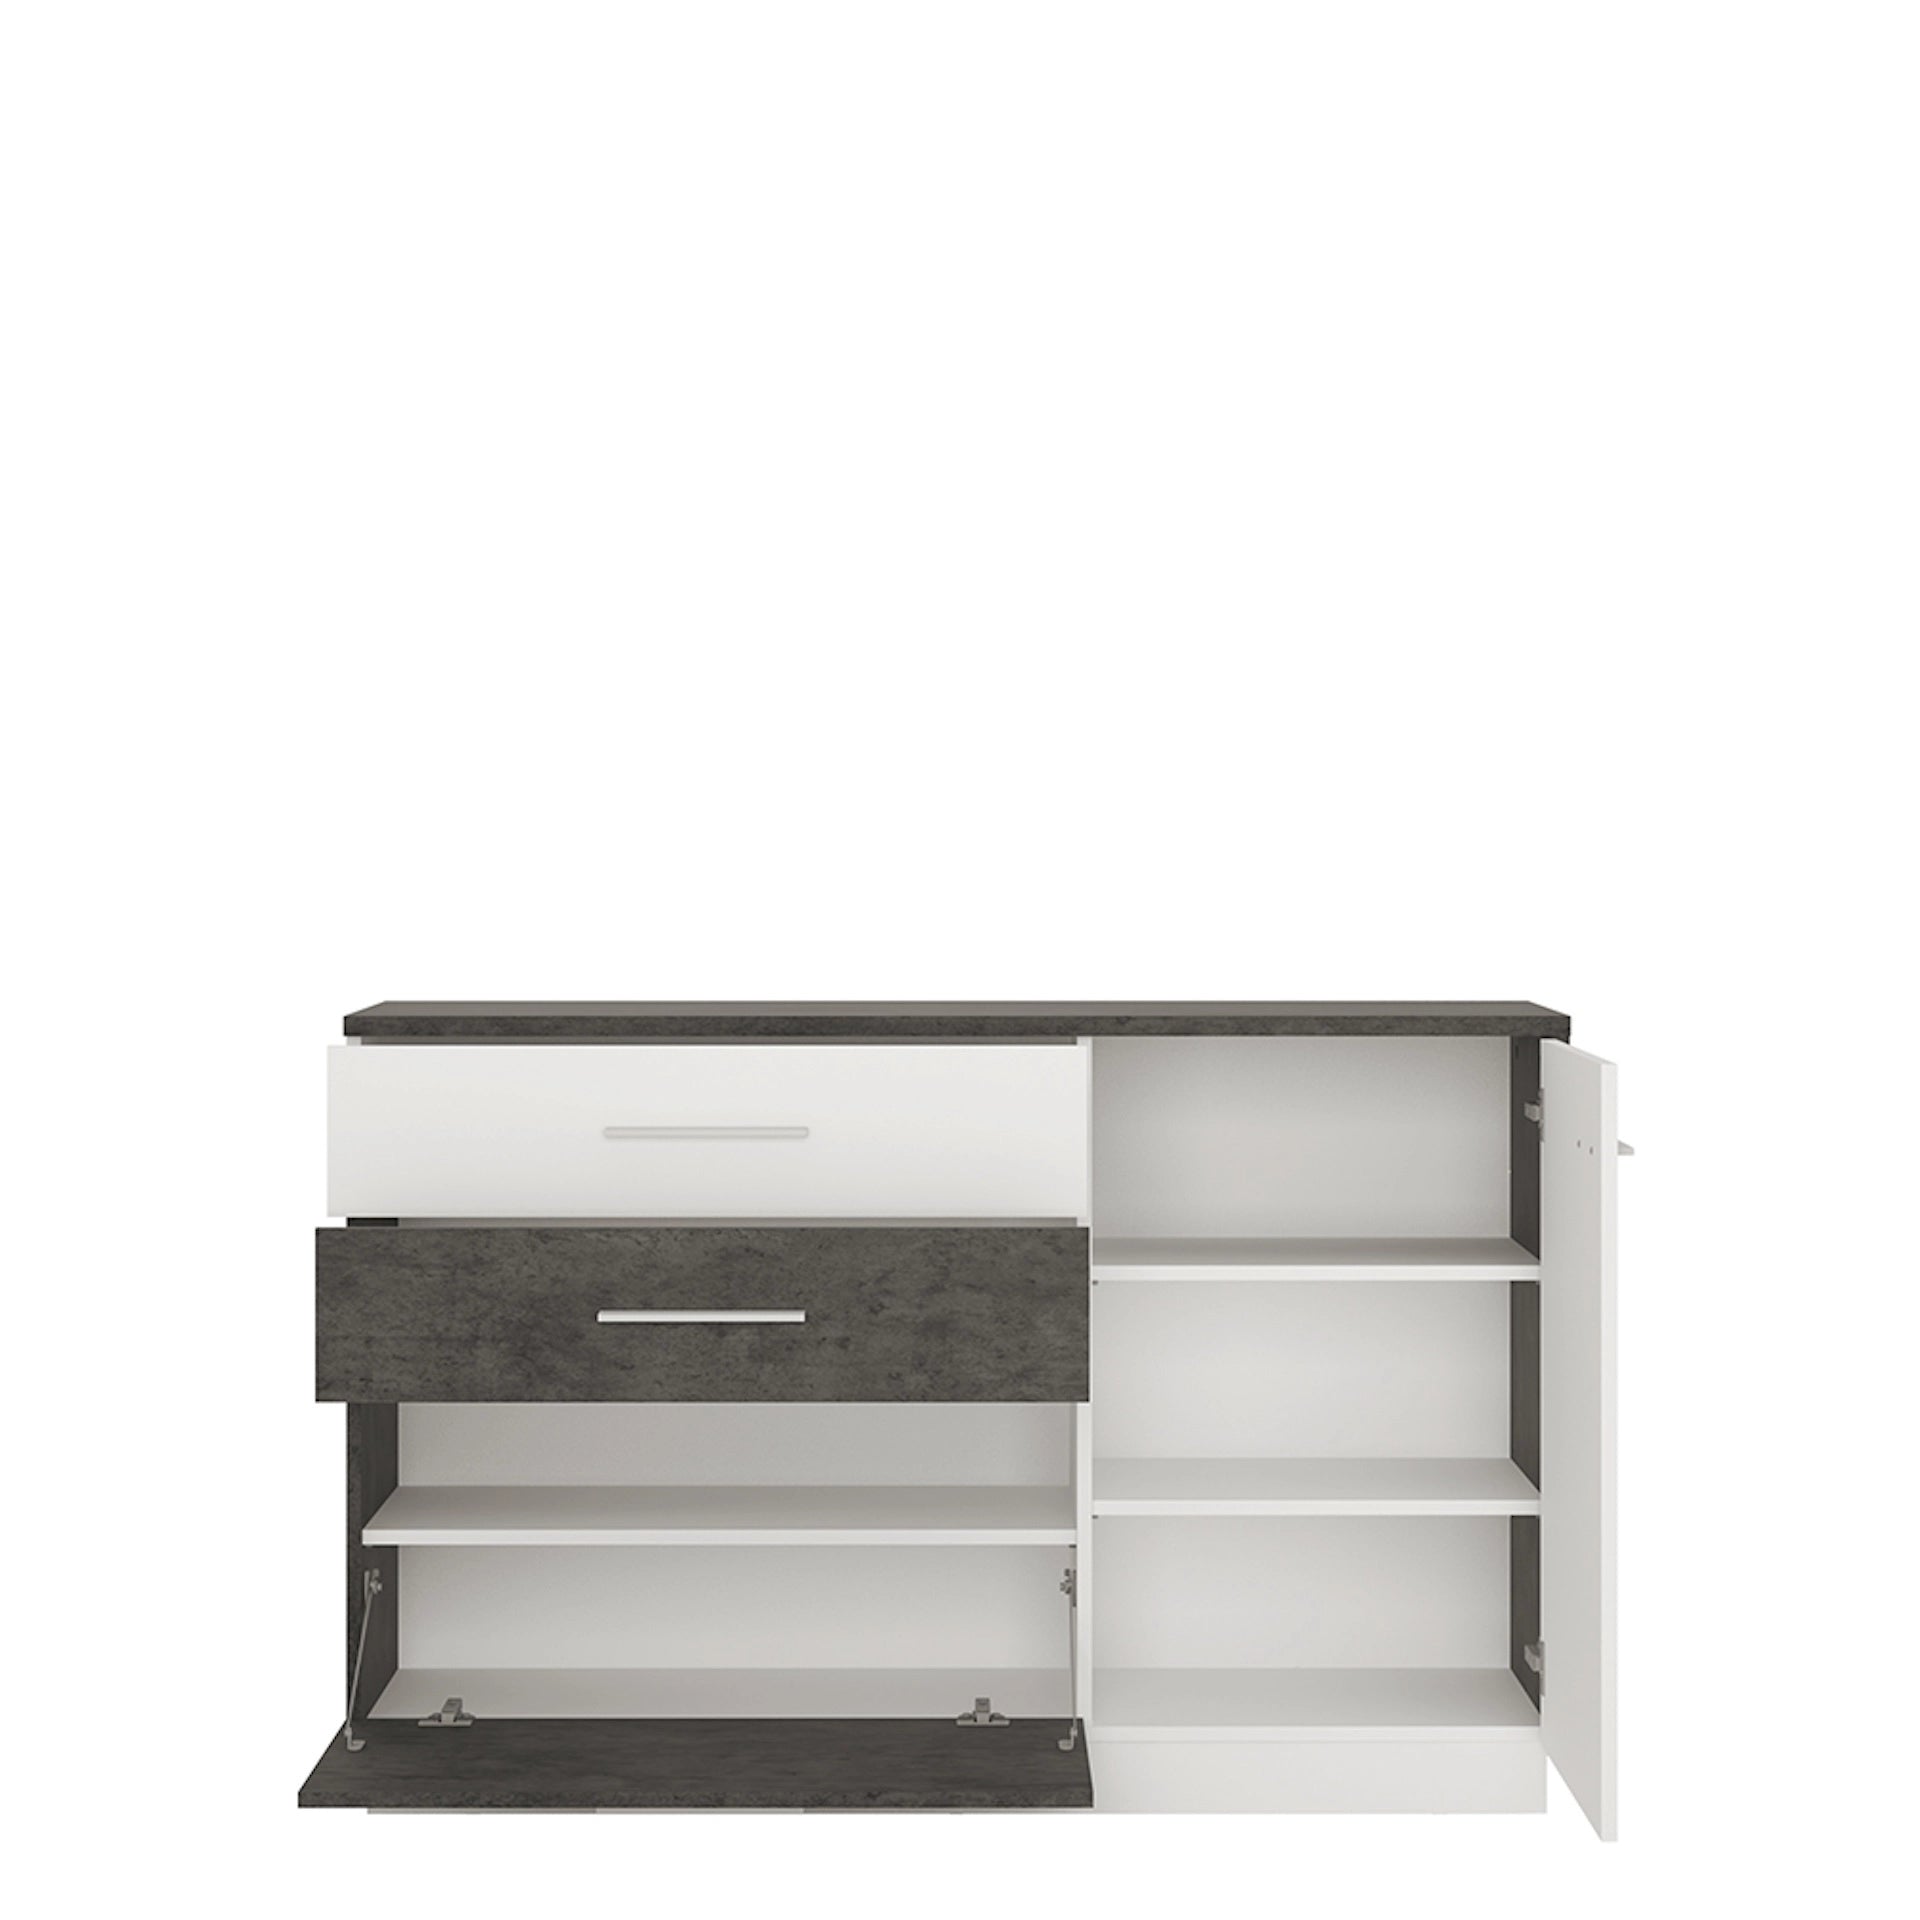 Furniture To Go Zingaro 1 Door 2 Drawer 1 Compartment Sideboard in Grey & White